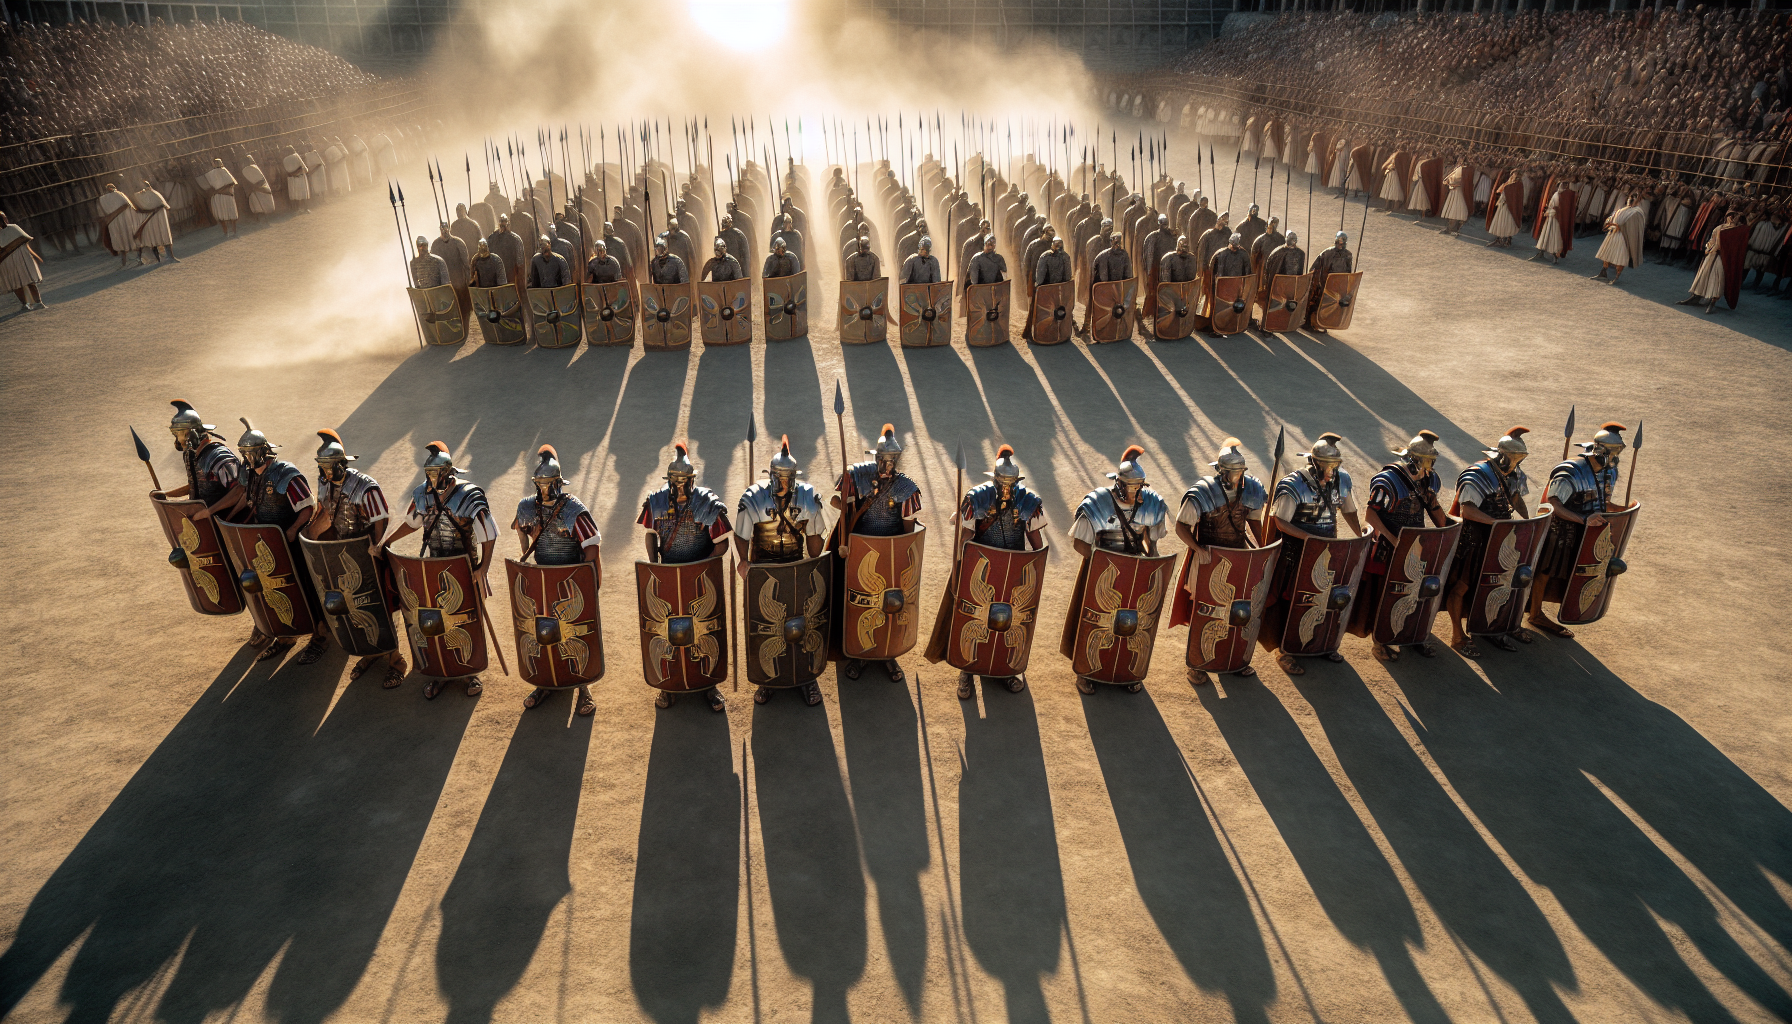 Roman legionaries in battle formation